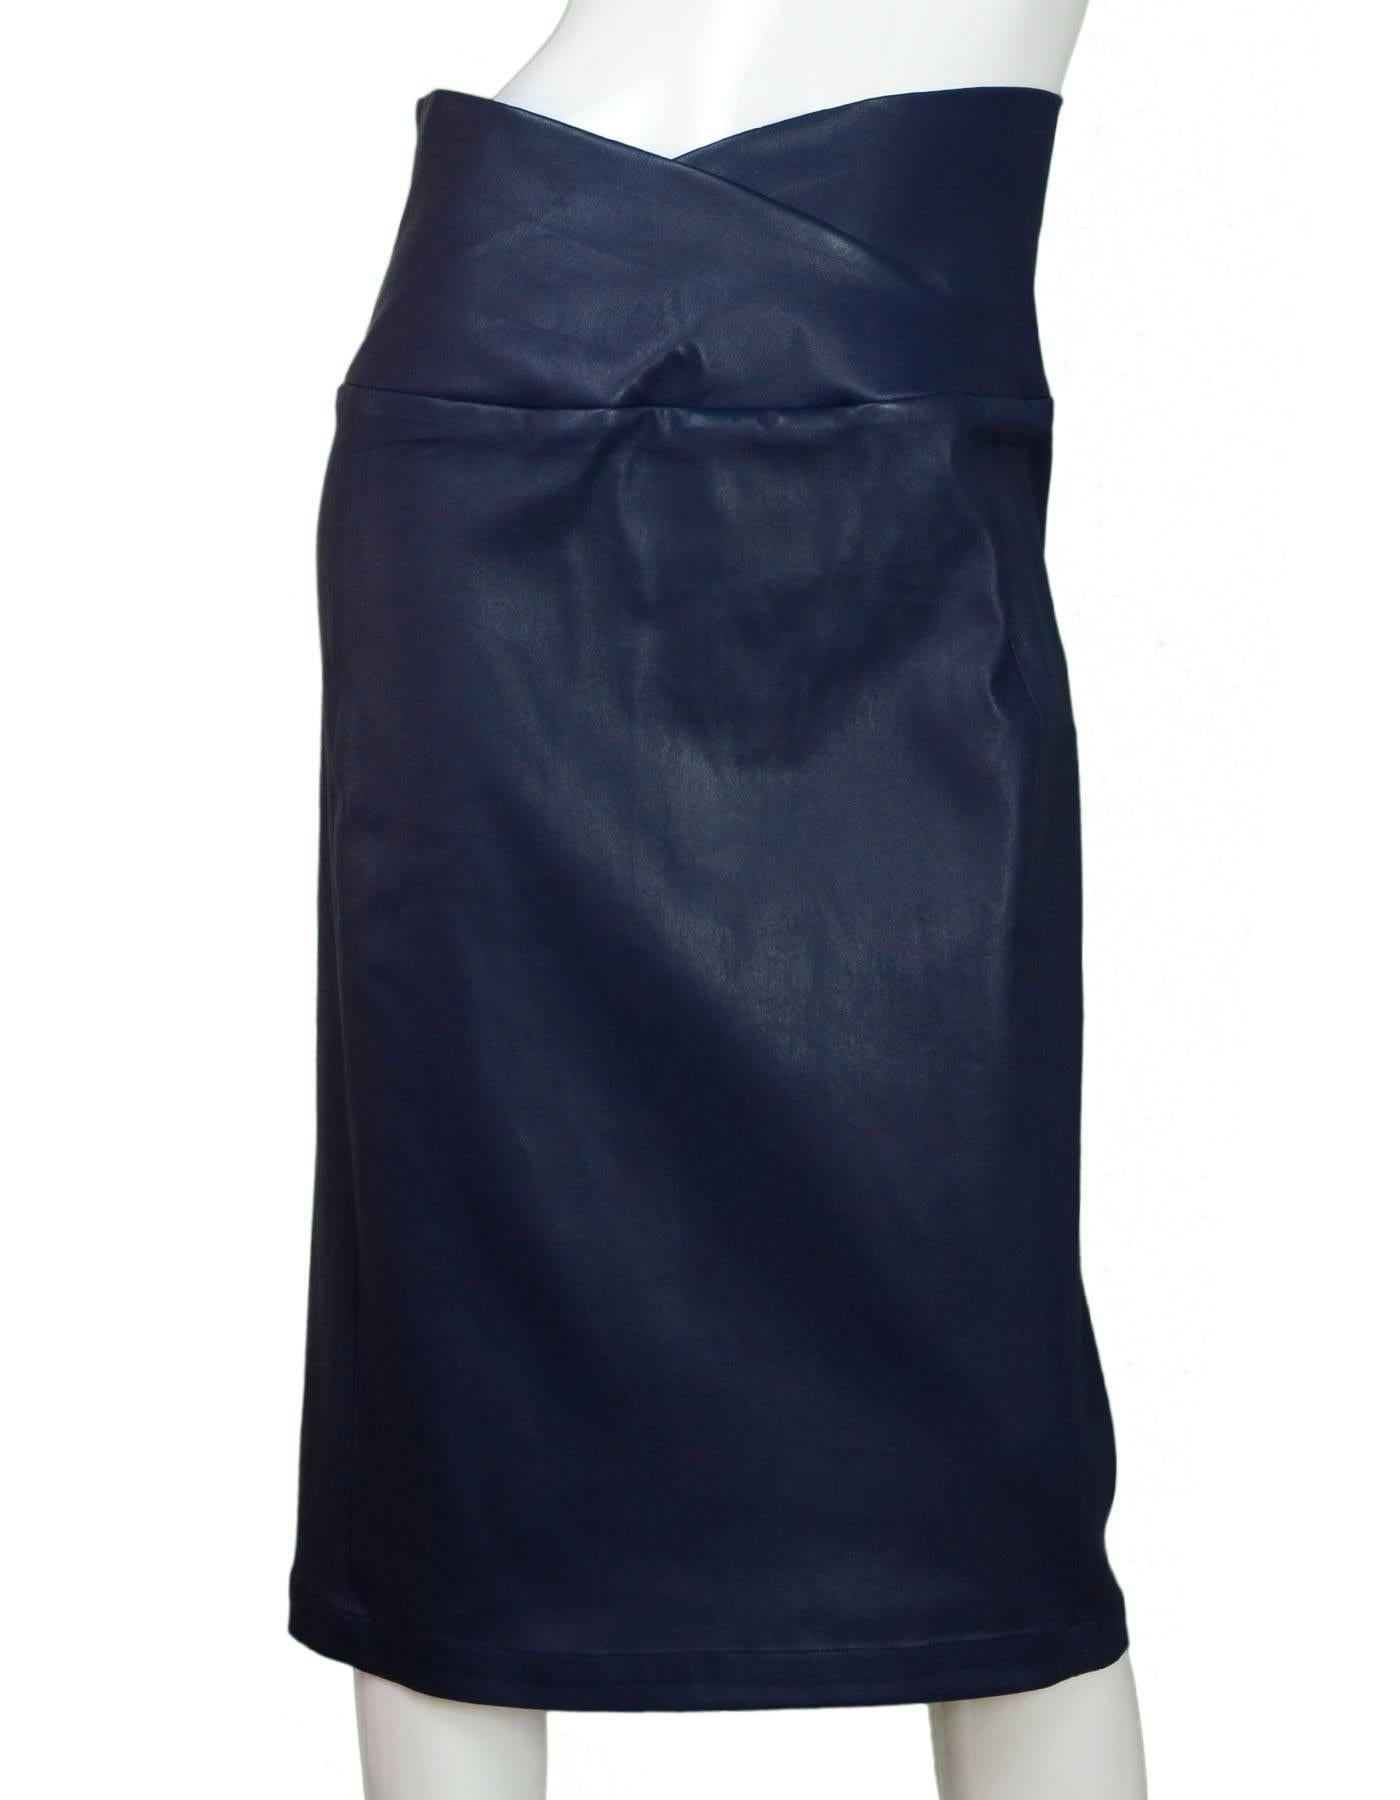 Black Zero + Maria Cornejo Navy Leather Nebi Skirt Sz 10 NWT